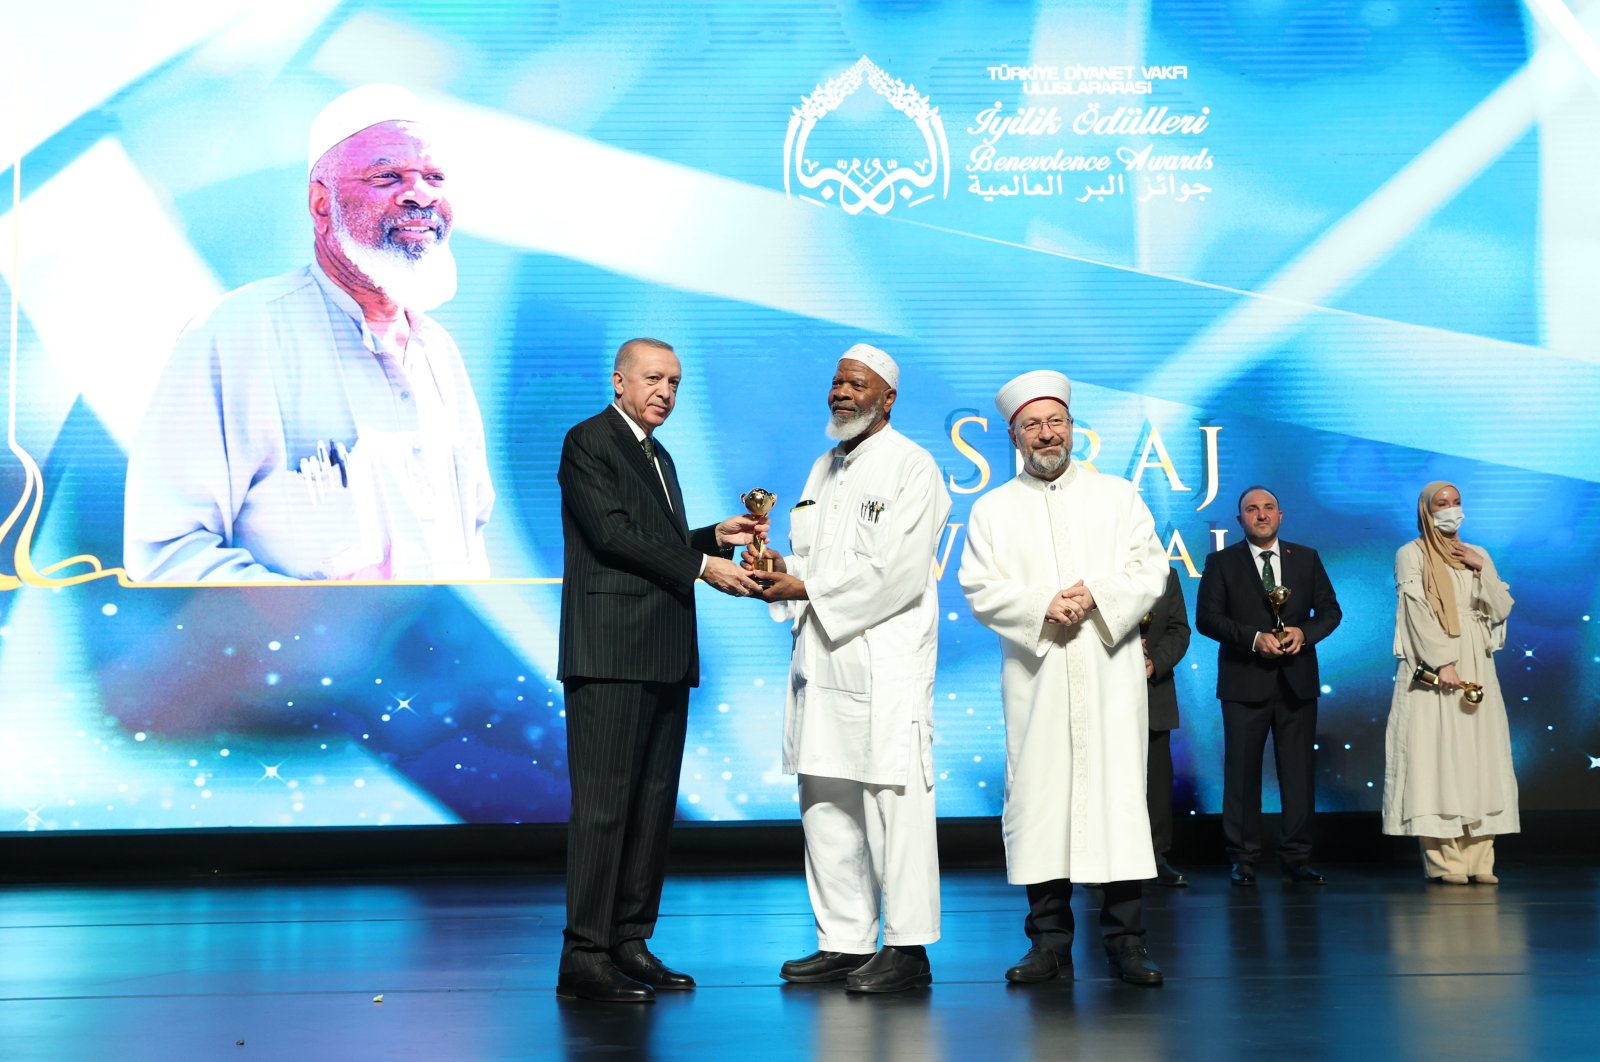 President Recep Tayyip Erdoğan (L) presents the benevolence award to Siraj Wahhaj (C) at the ceremony in the capital Ankara, Turkey, March 15, 2022. (AA Photo)